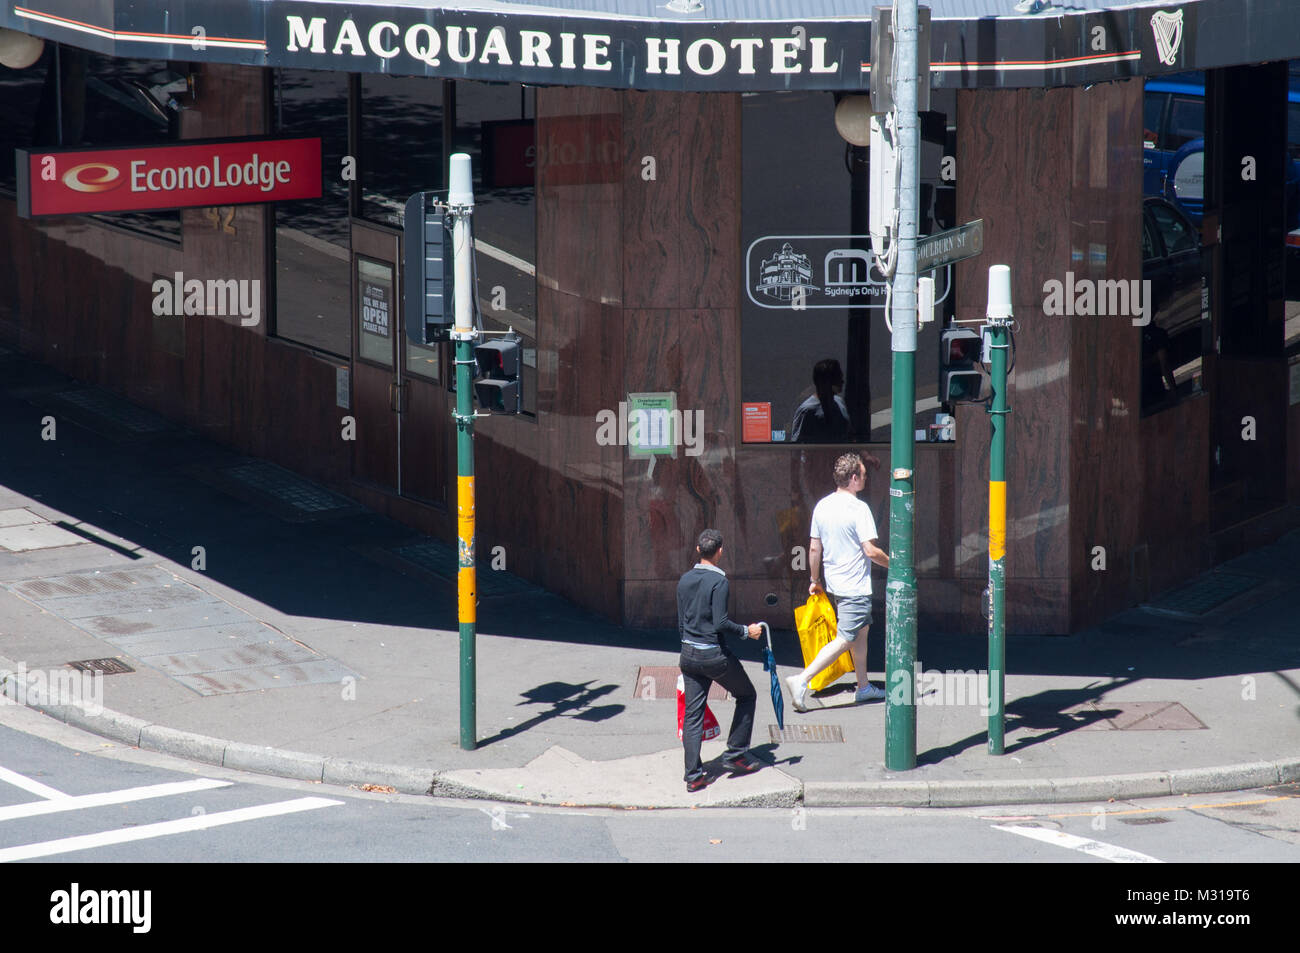 Macquarie Hotel in Sydney Stock Photo